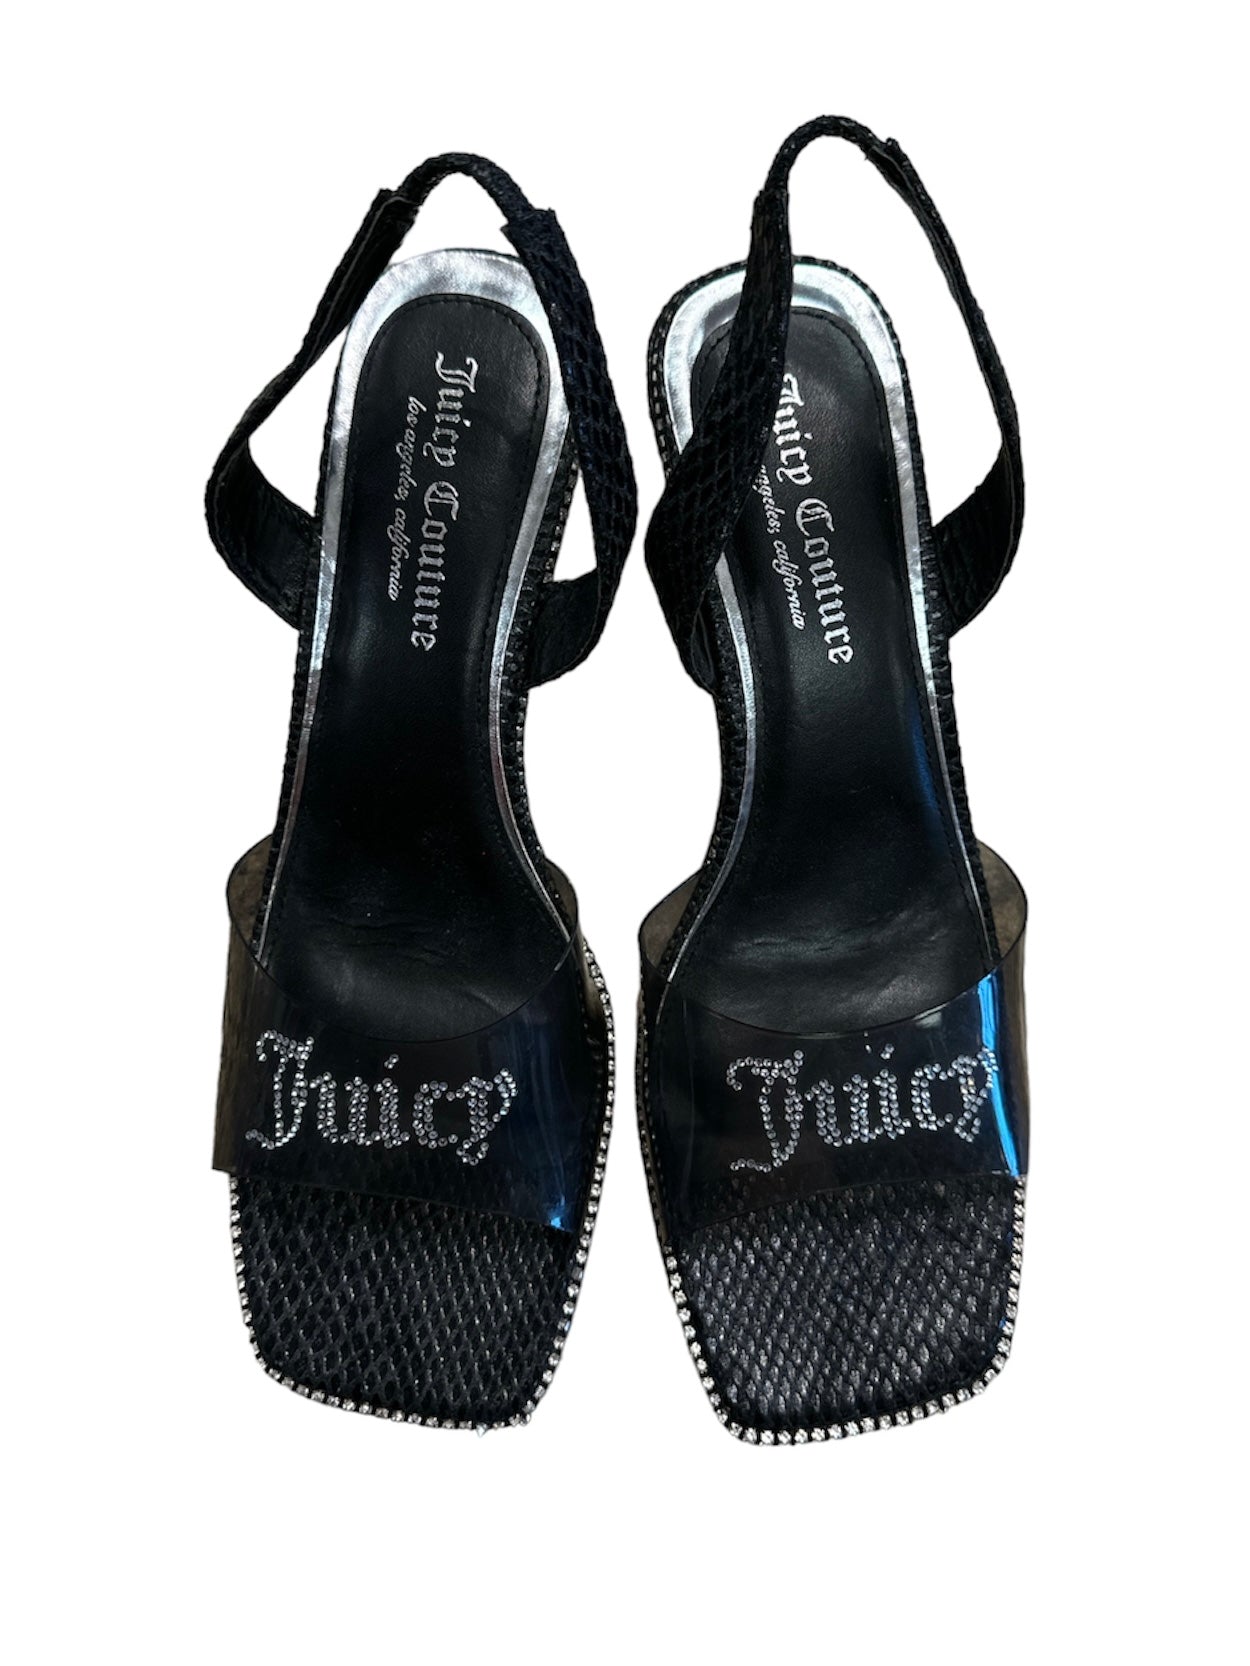 Black & Silver Sandals Heels Stiletto Juicy Couture, Size 9.5